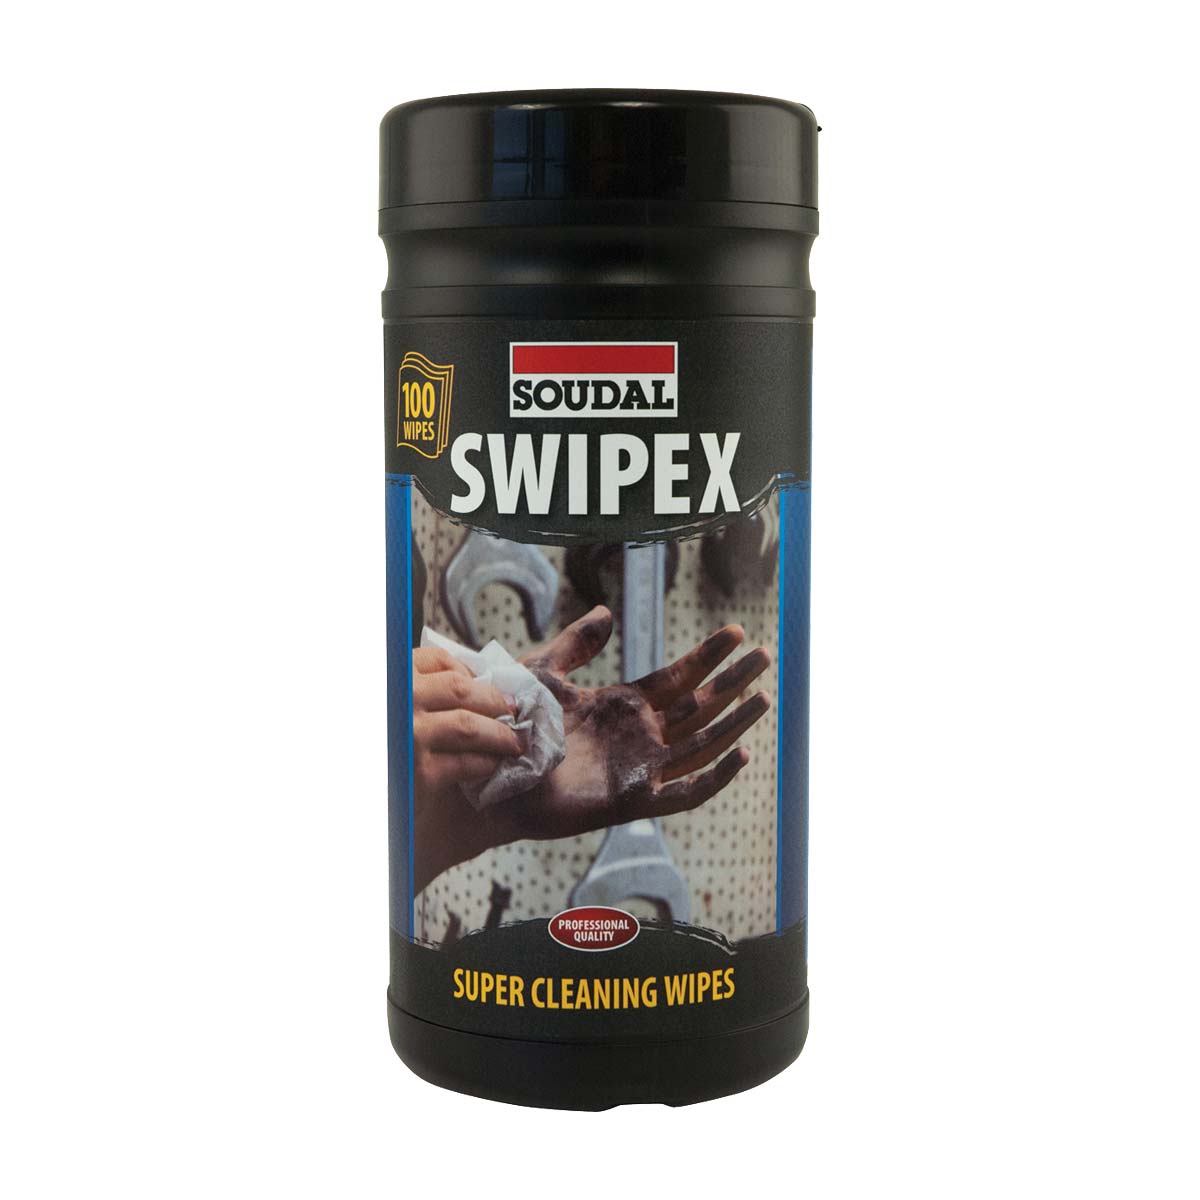 Toallitas limpia residuos Swipex de la marca SOUDAL